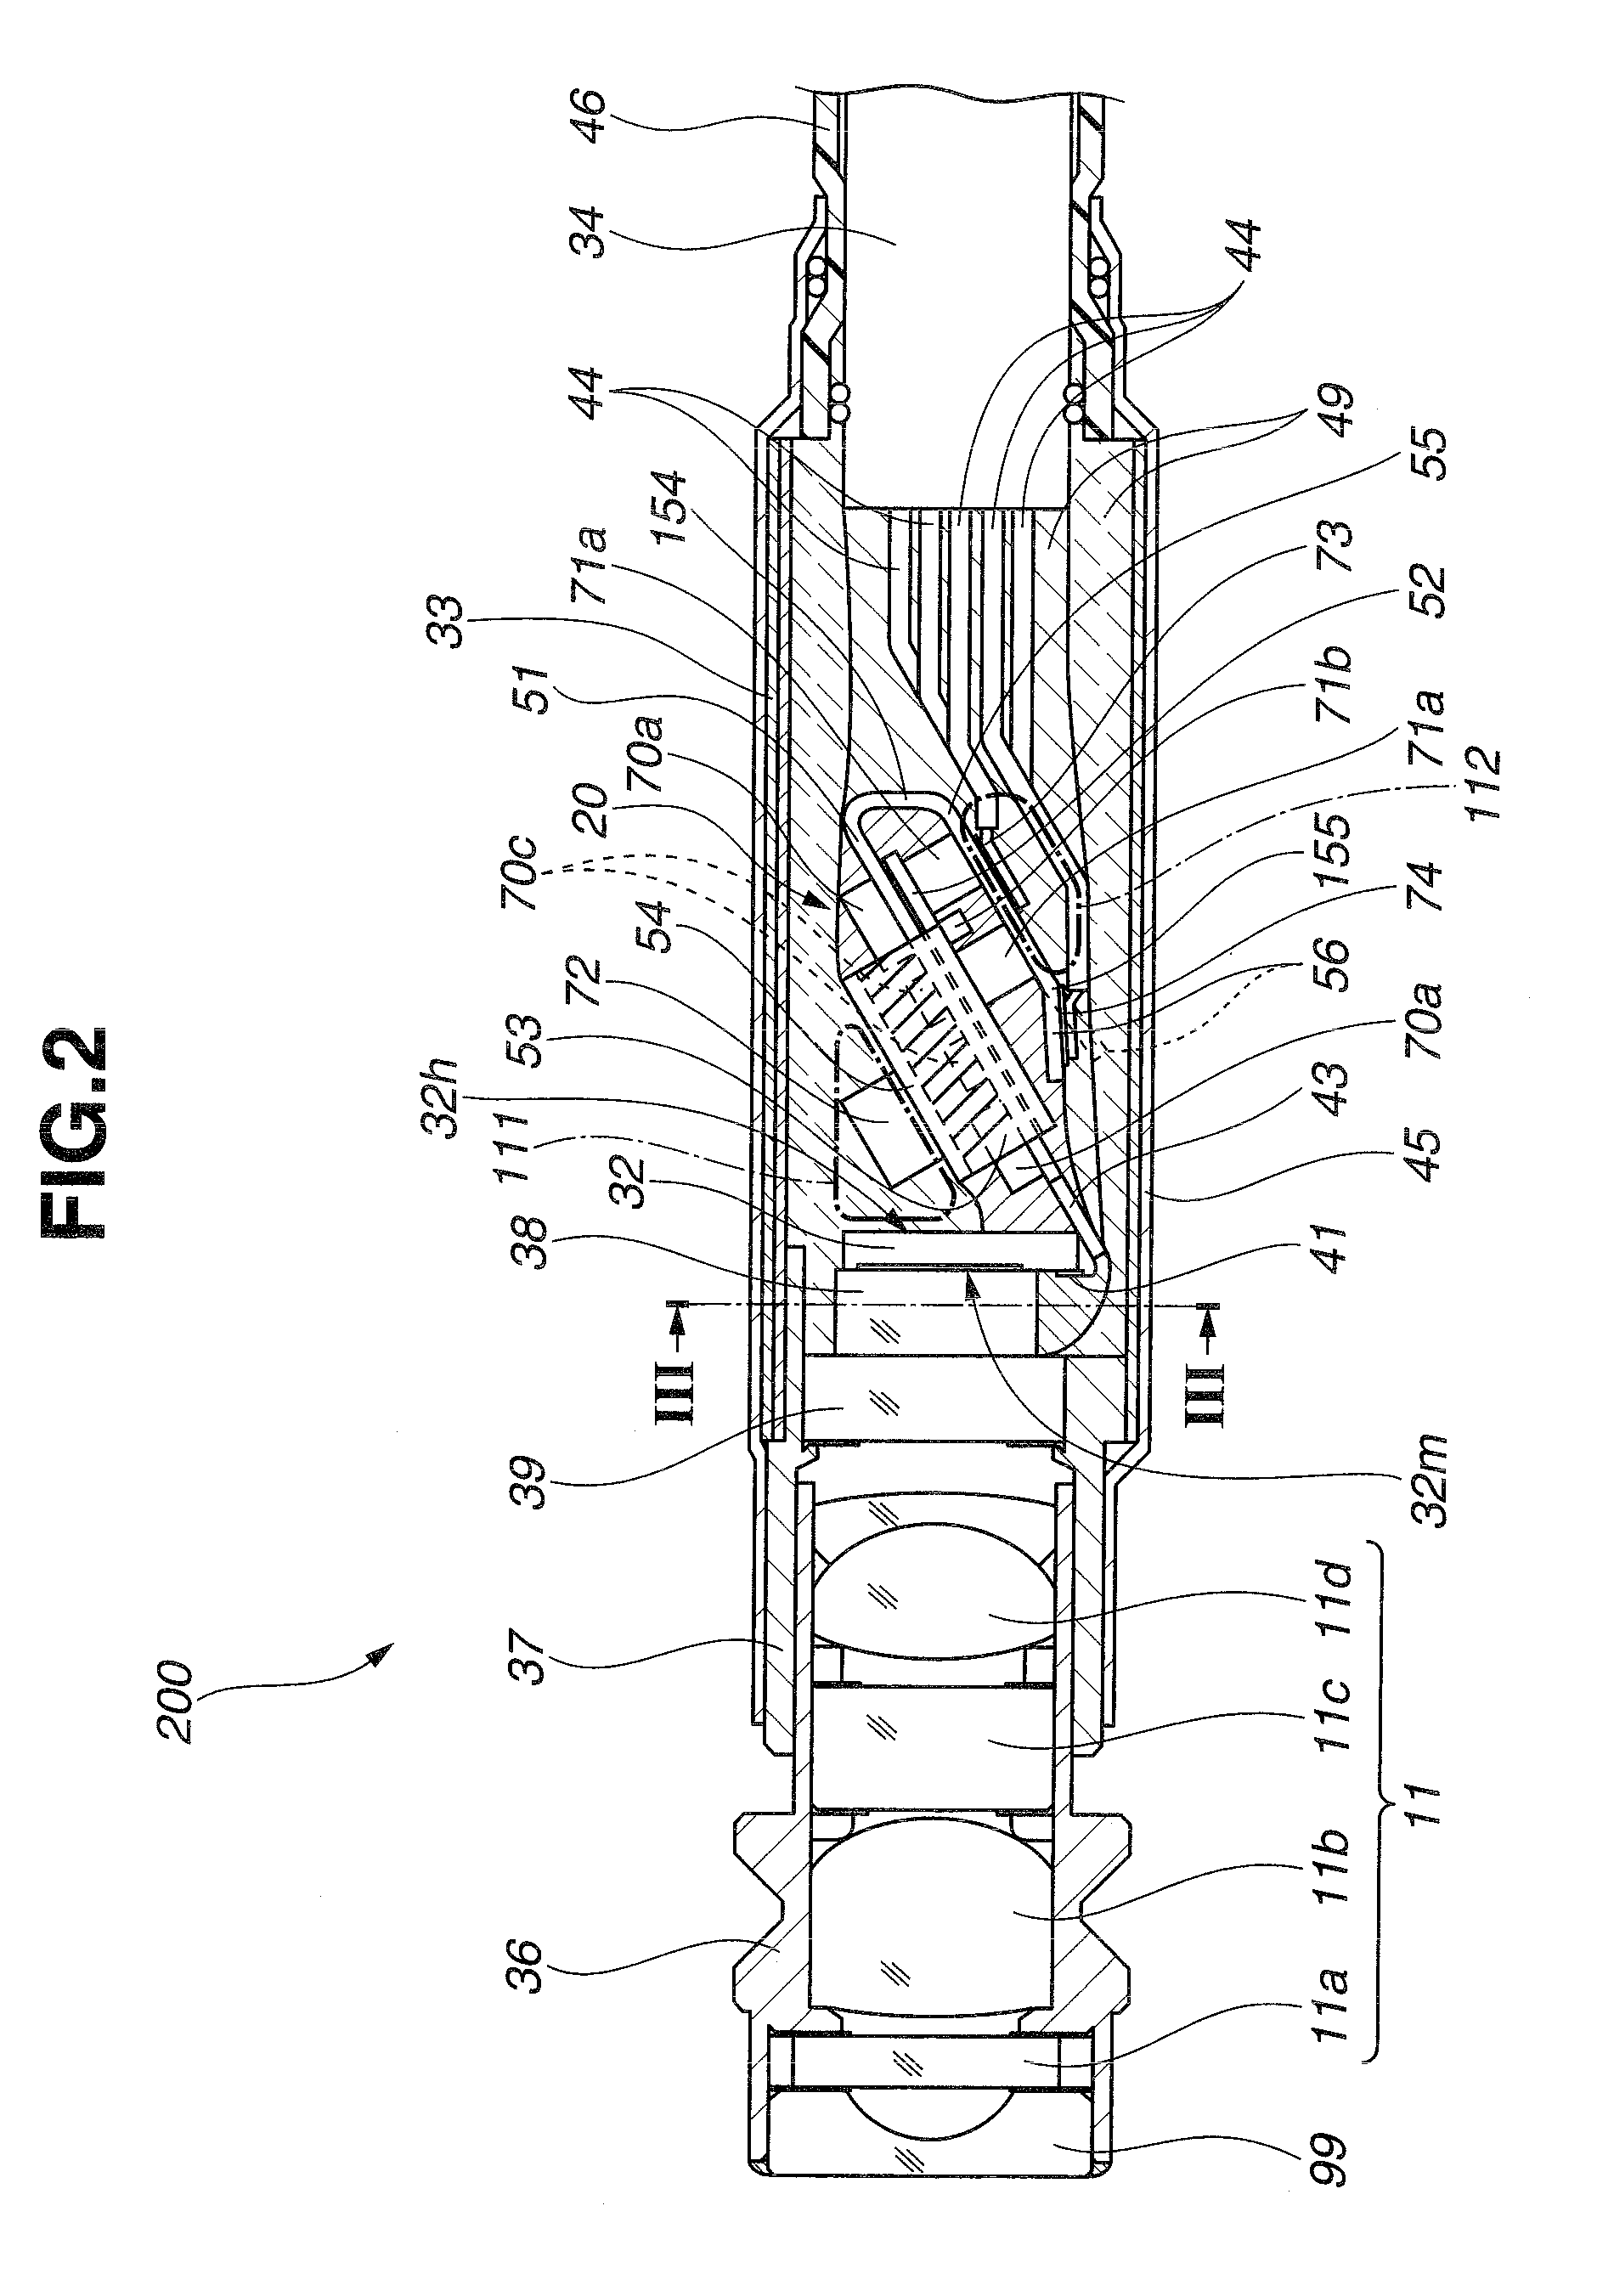 Image pickup apparatus and endoscope